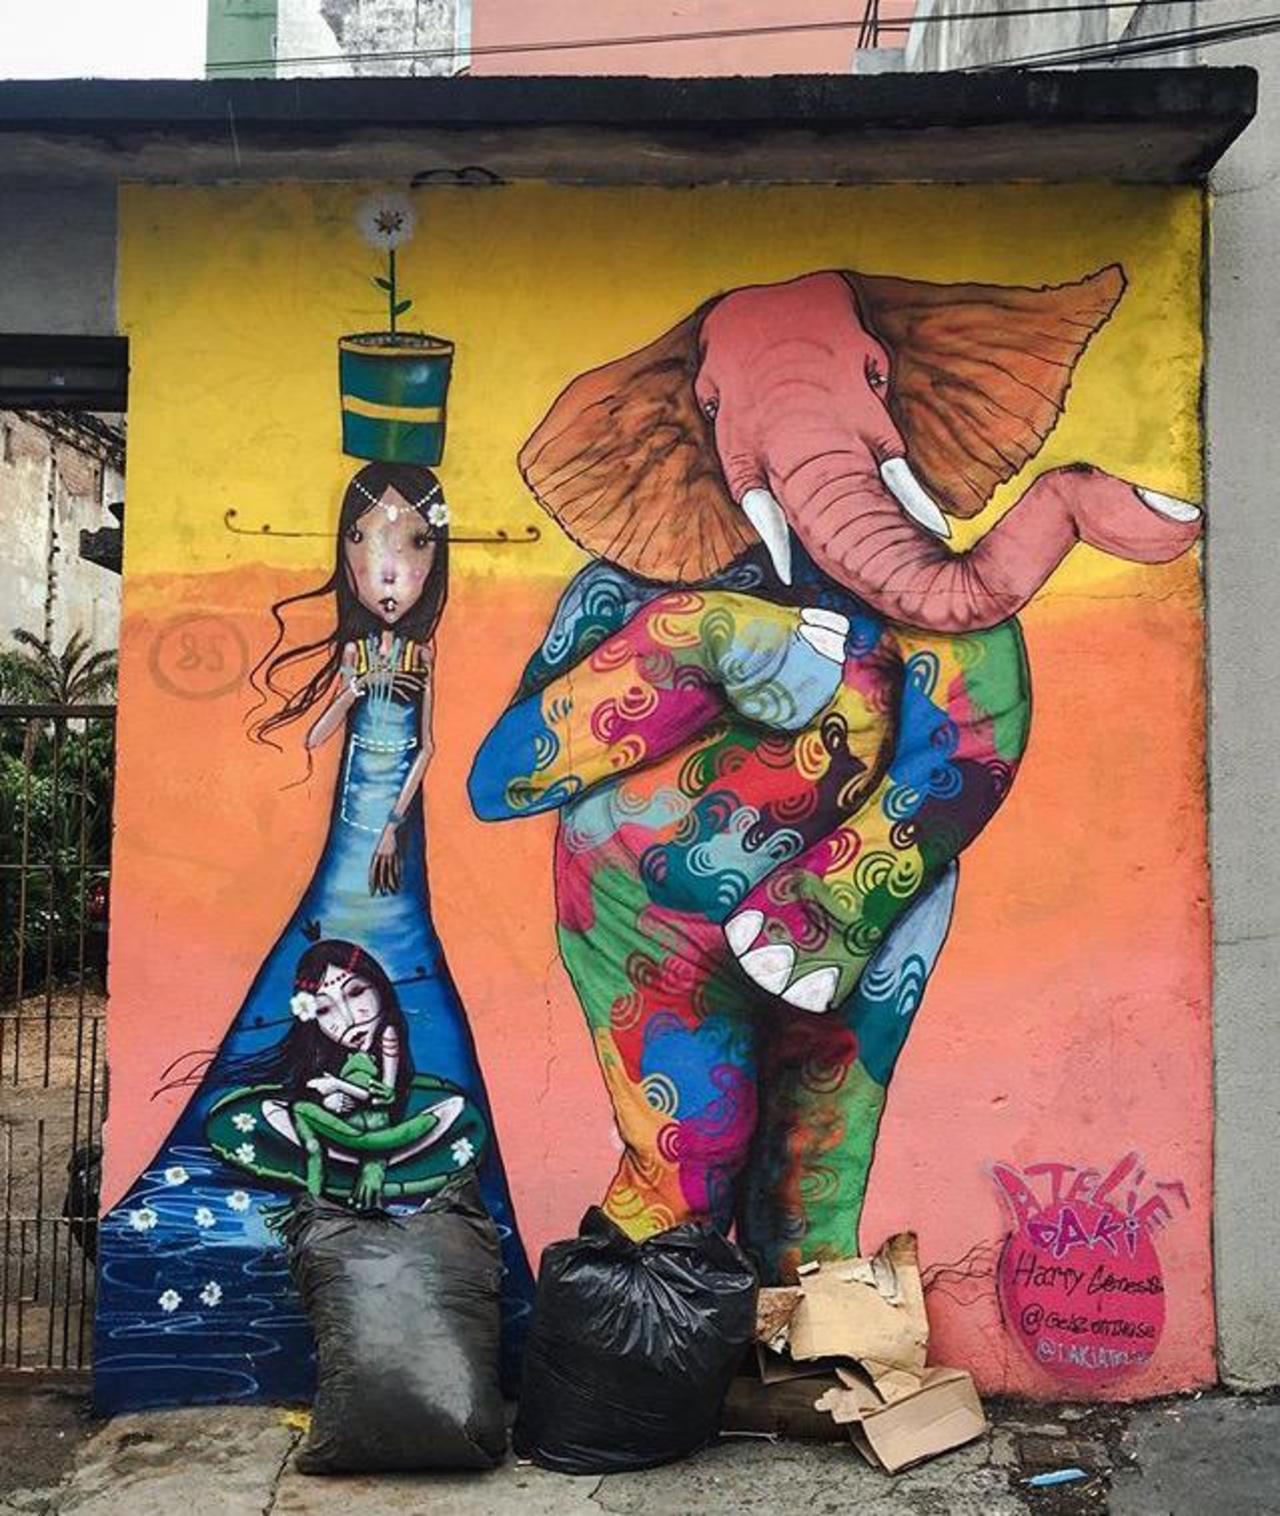 Street Art by Harry Geneis & Gelson in São Paulo 

#art #mural #graffiti #streetart http://t.co/pqeYf2eTvF yo